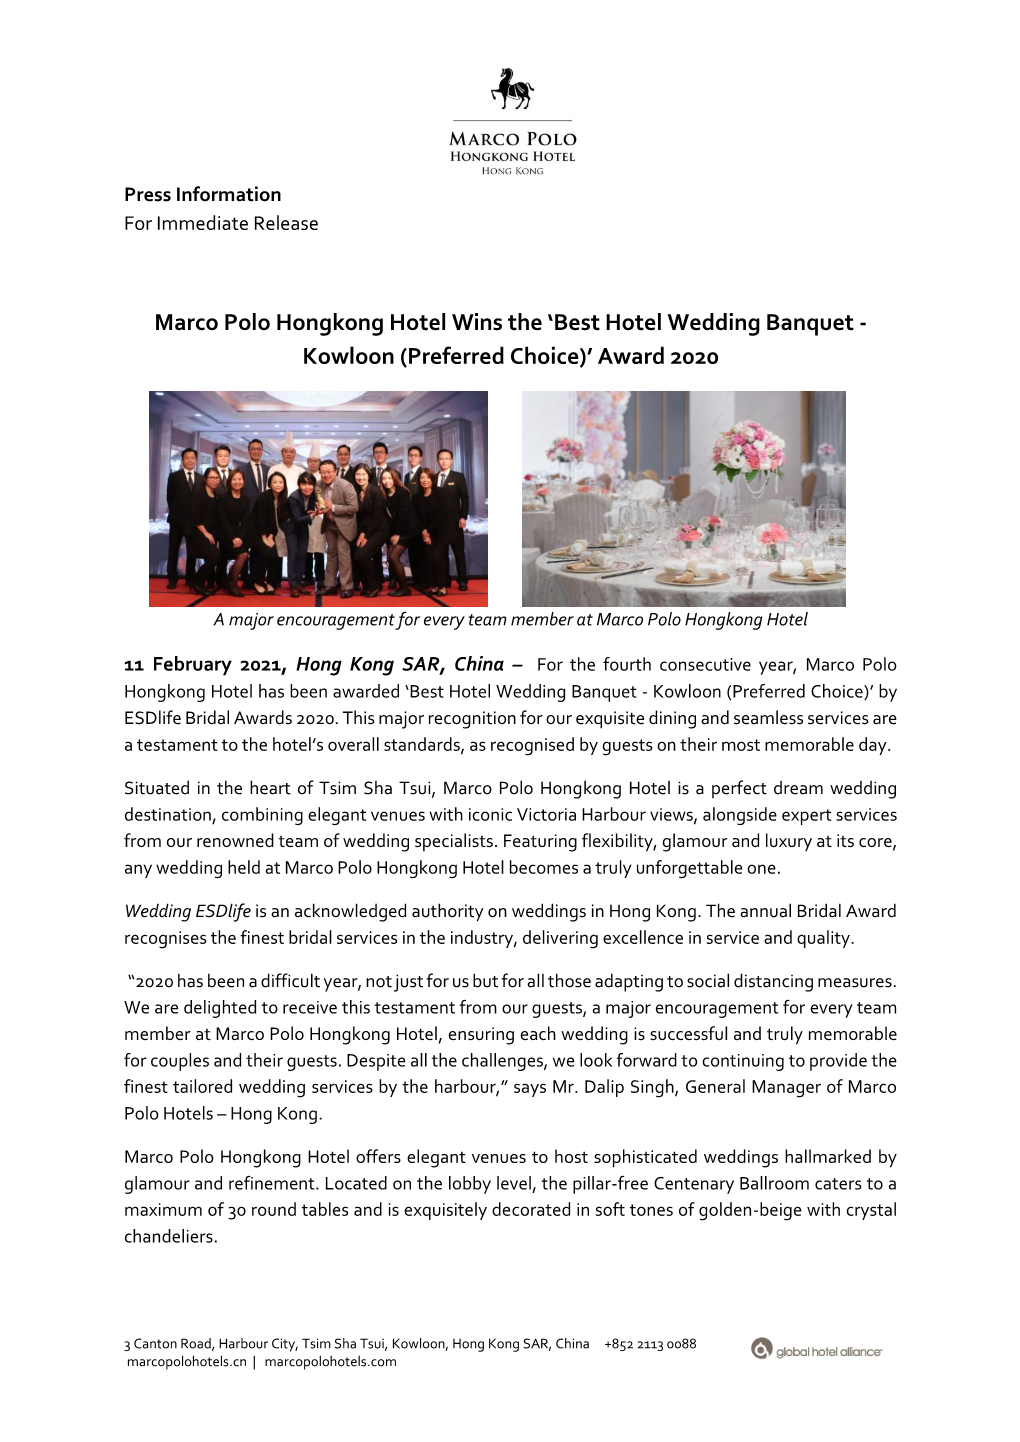 Marco Polo Hongkong Hotel Wins the ‘Best Hotel Wedding Banquet - Kowloon (Preferred Choice)’ Award 2020